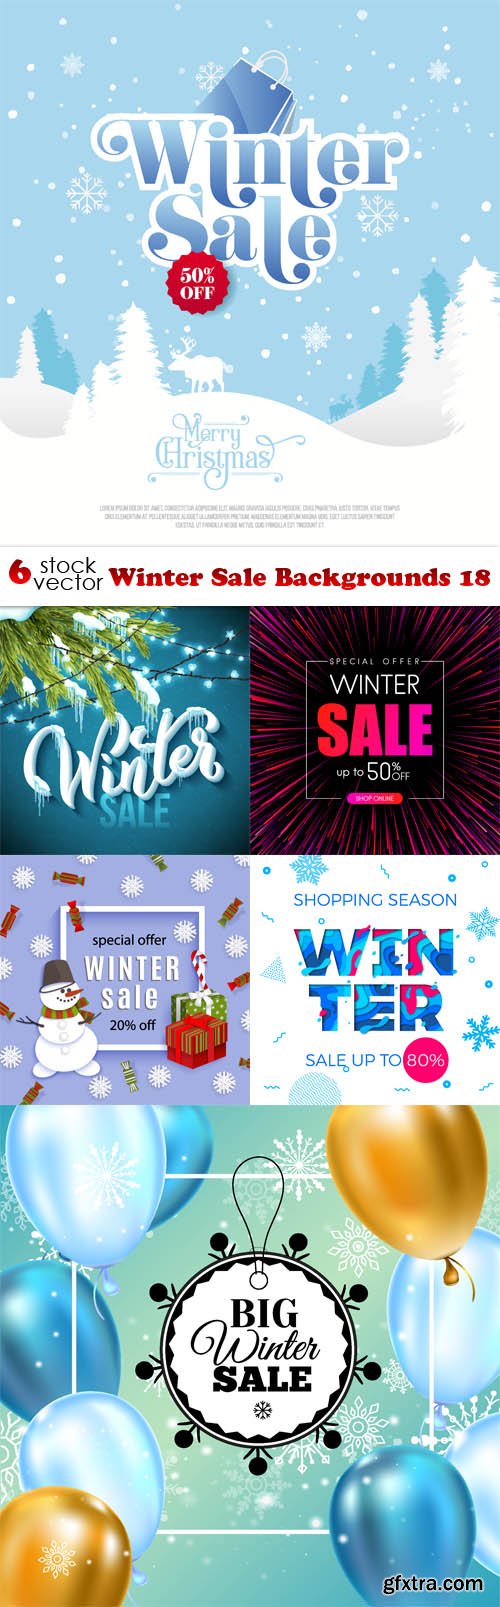 Vectors - Winter Sale Backgrounds 18